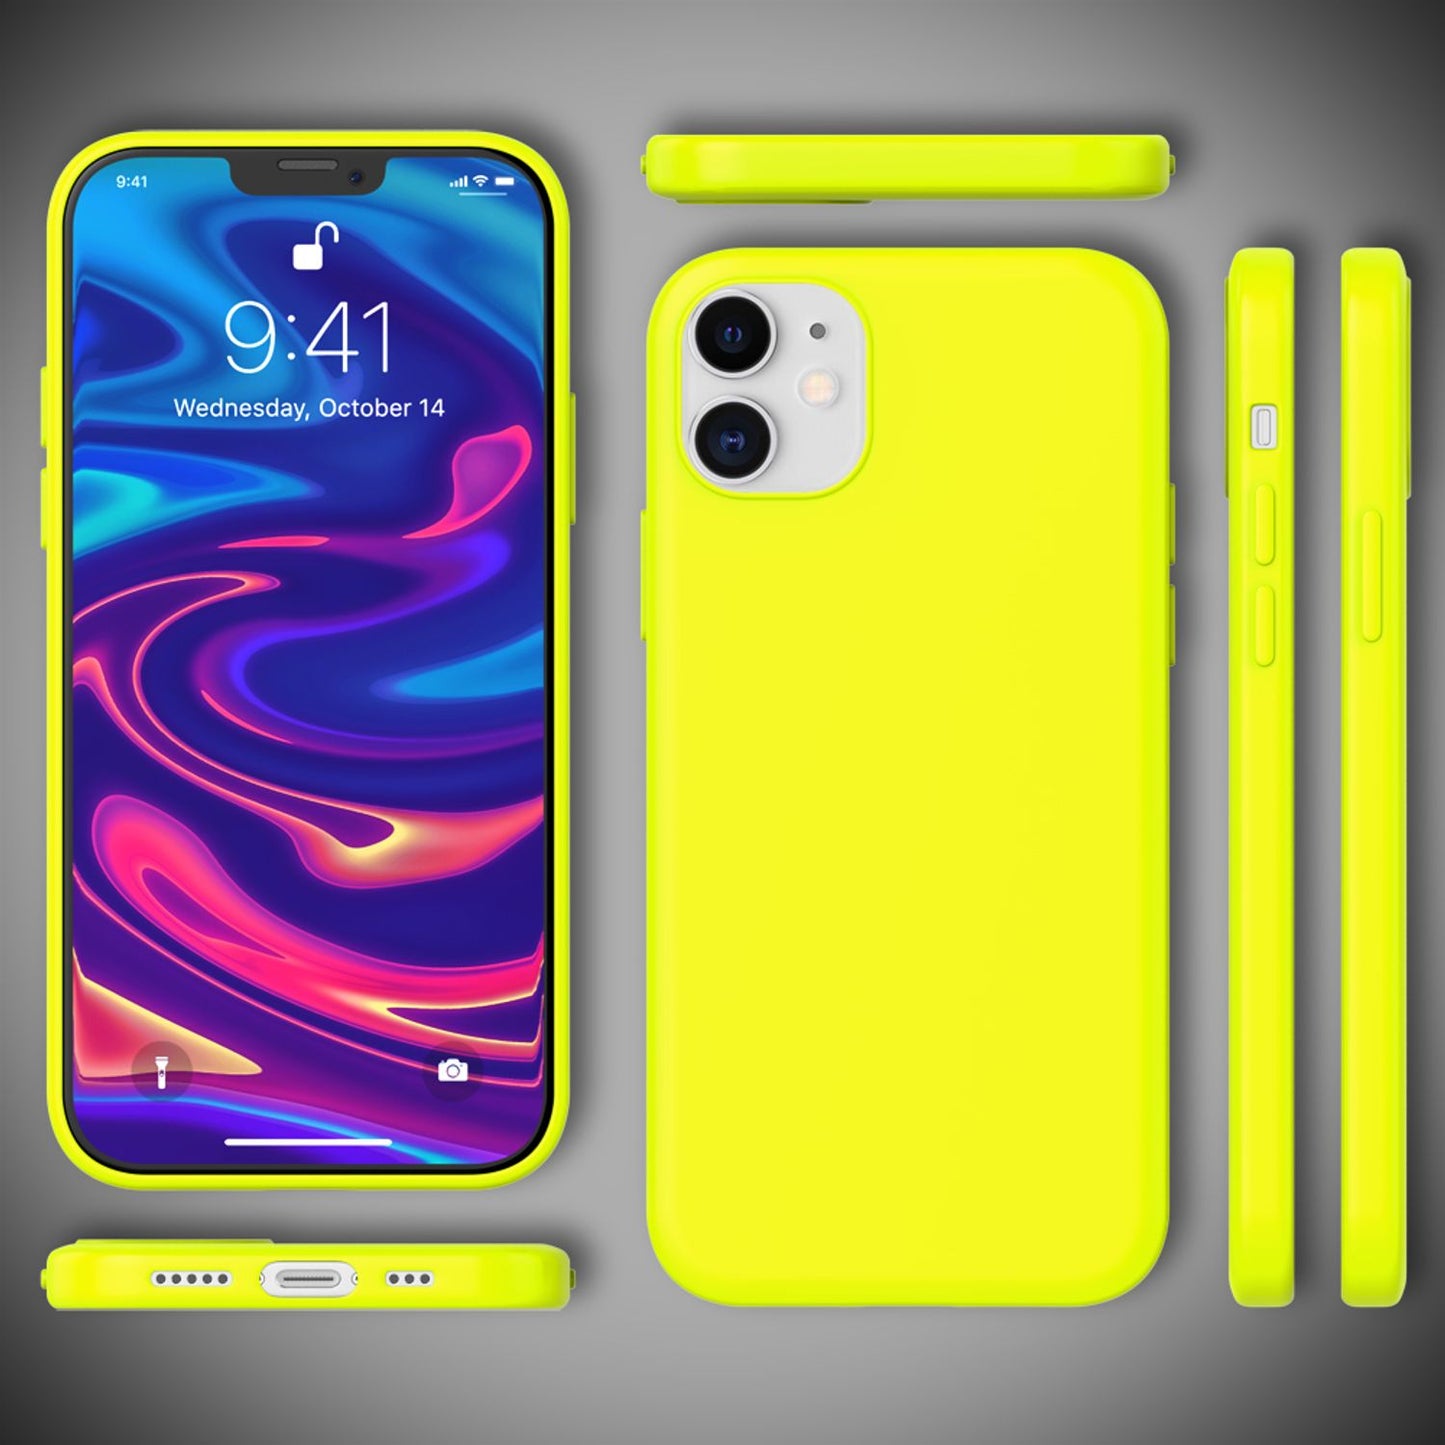 NALIA Neon Handy Hülle für iPhone 12 / iPhone 12 Pro, Slim Case Schutz Cover TPU